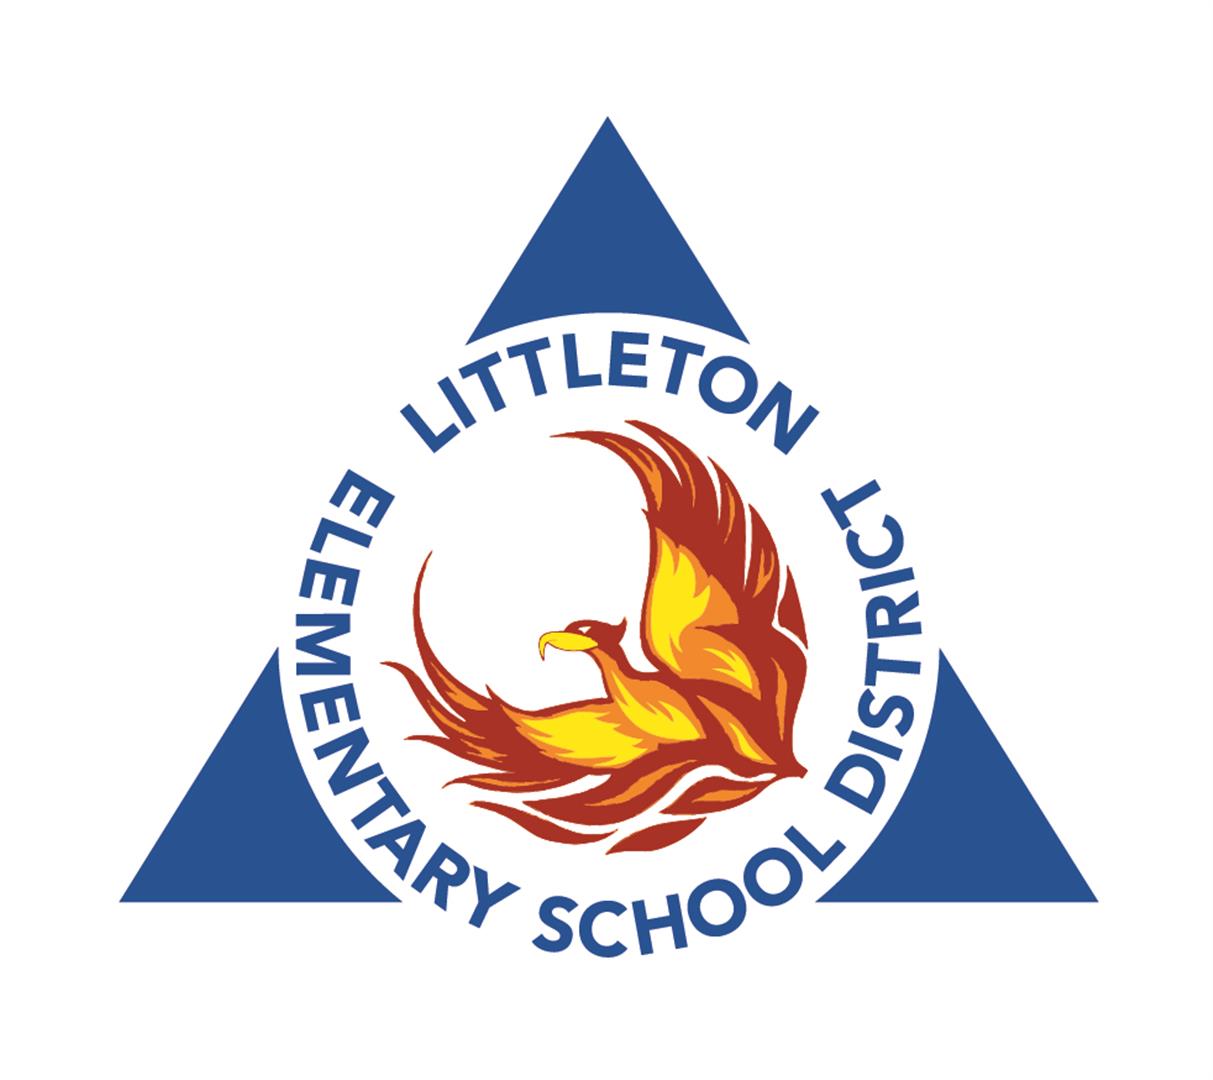 Littleton Elementary School District Operations